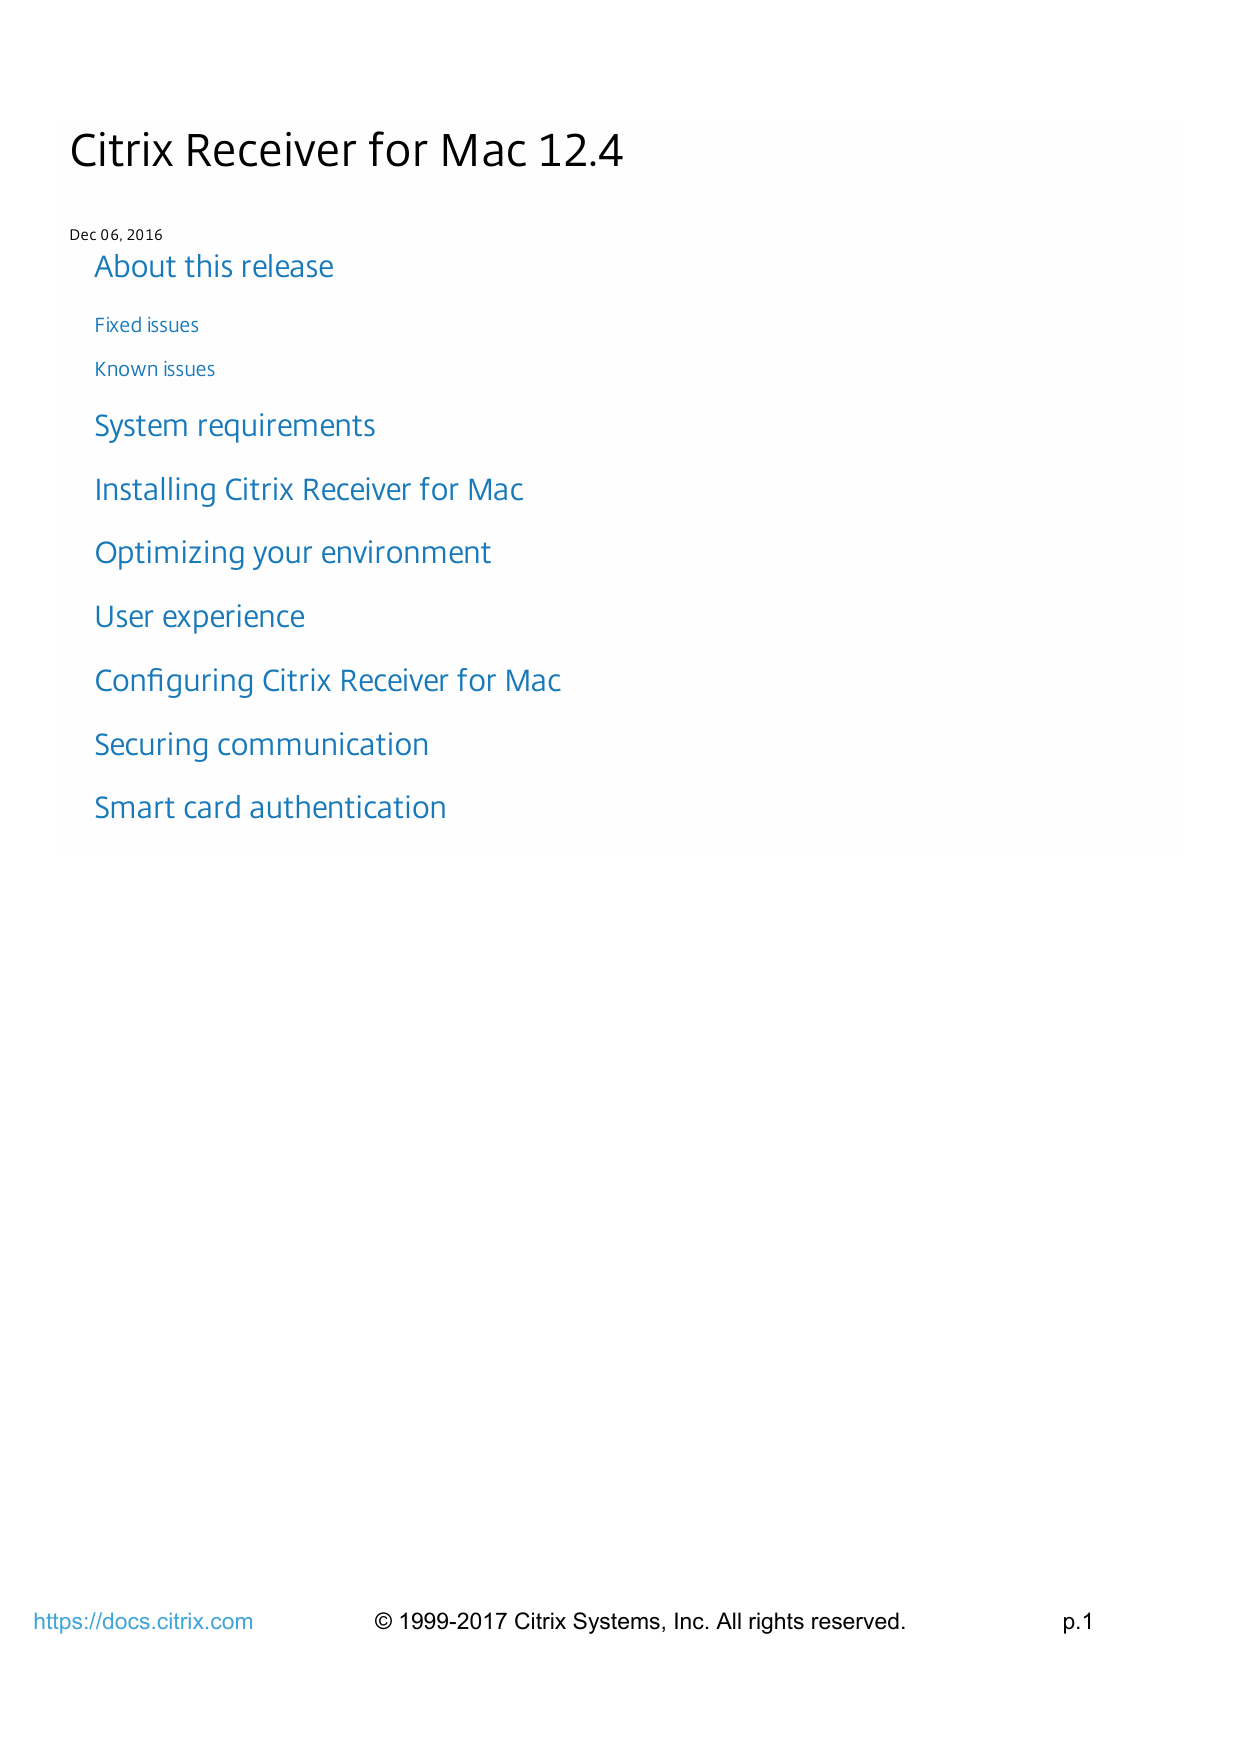 citrix receiver download for mac 10.12